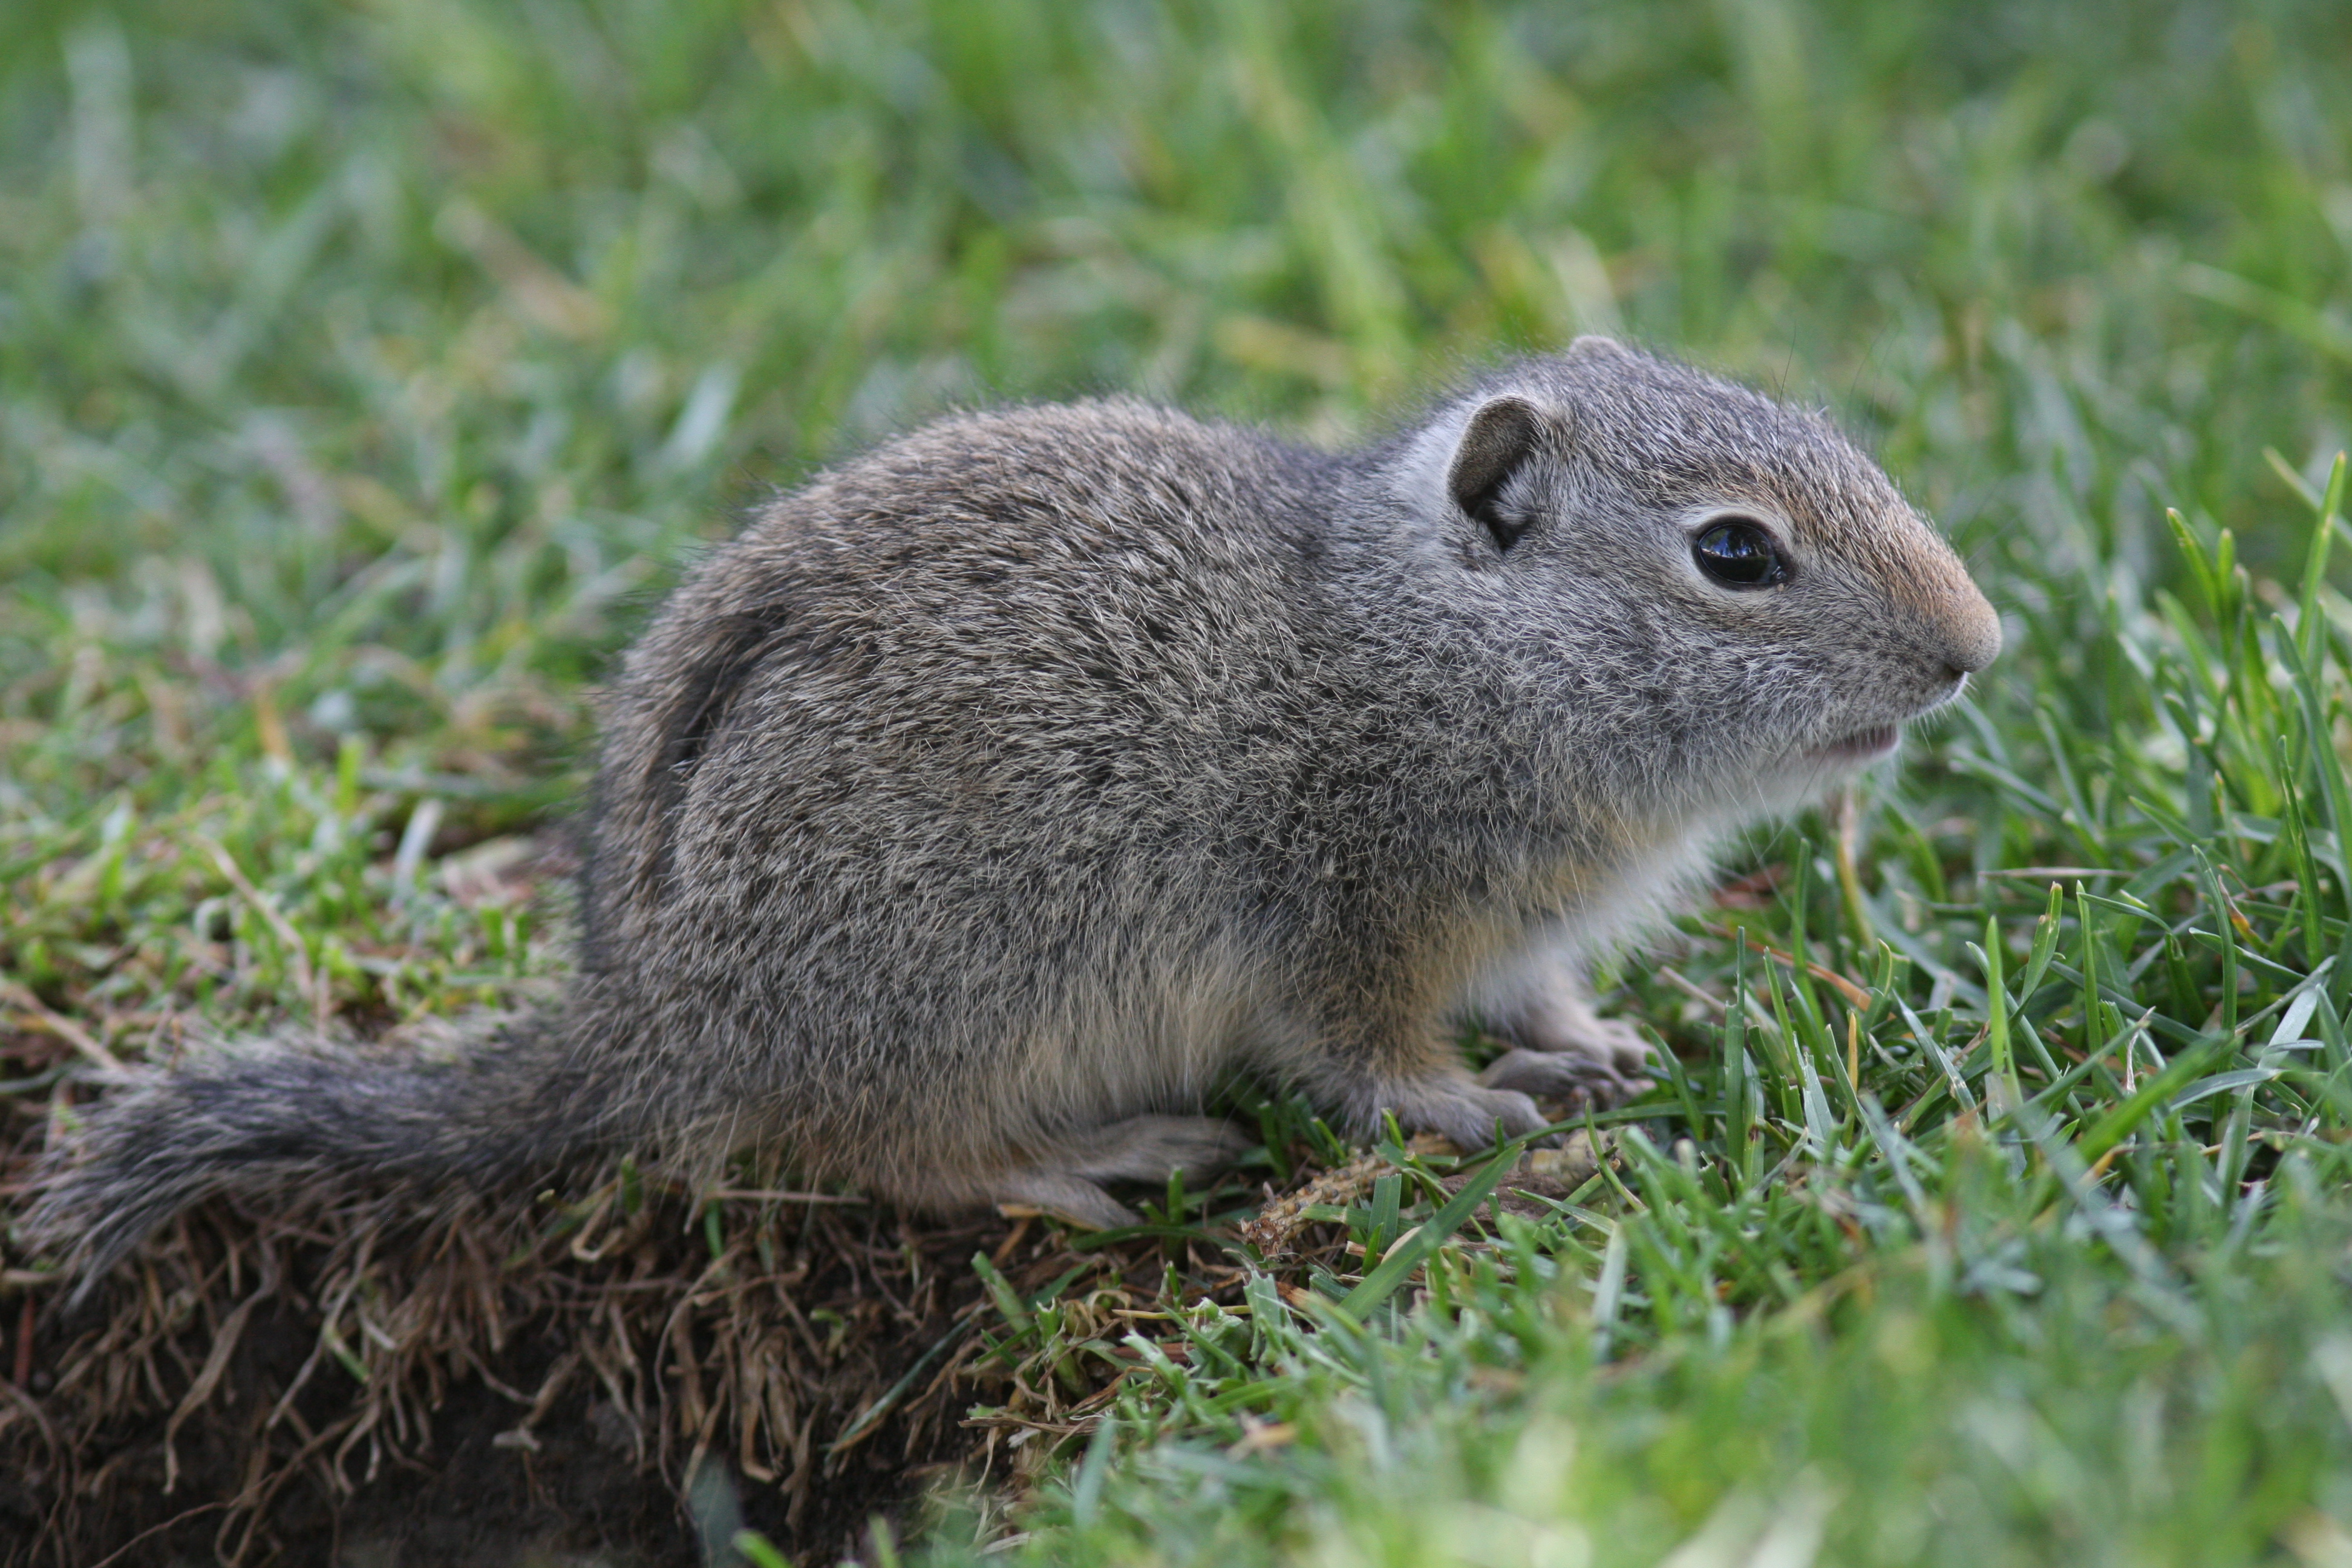 File:Uinta ground squirrel, Jackson.jpg - Wikimedia Commons